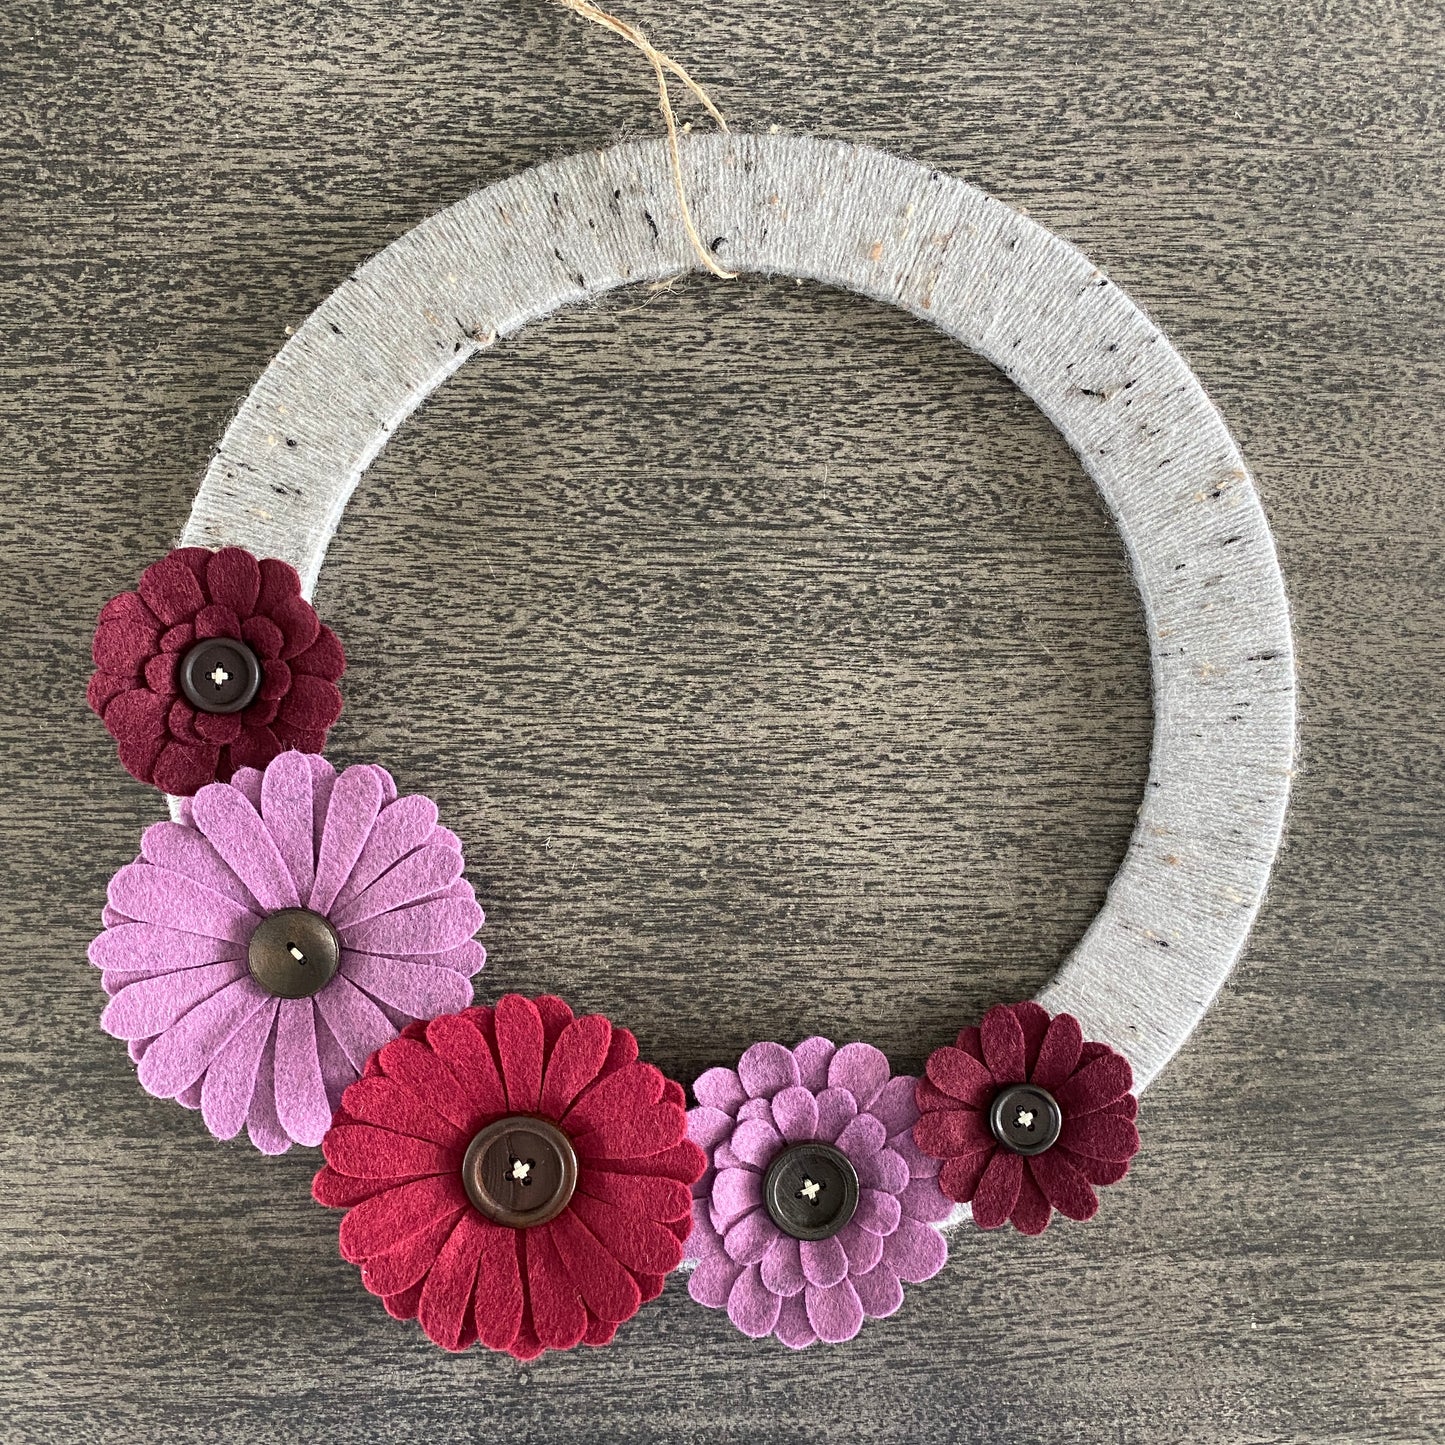 Felt Flower Wreath - Pink and Burgundy